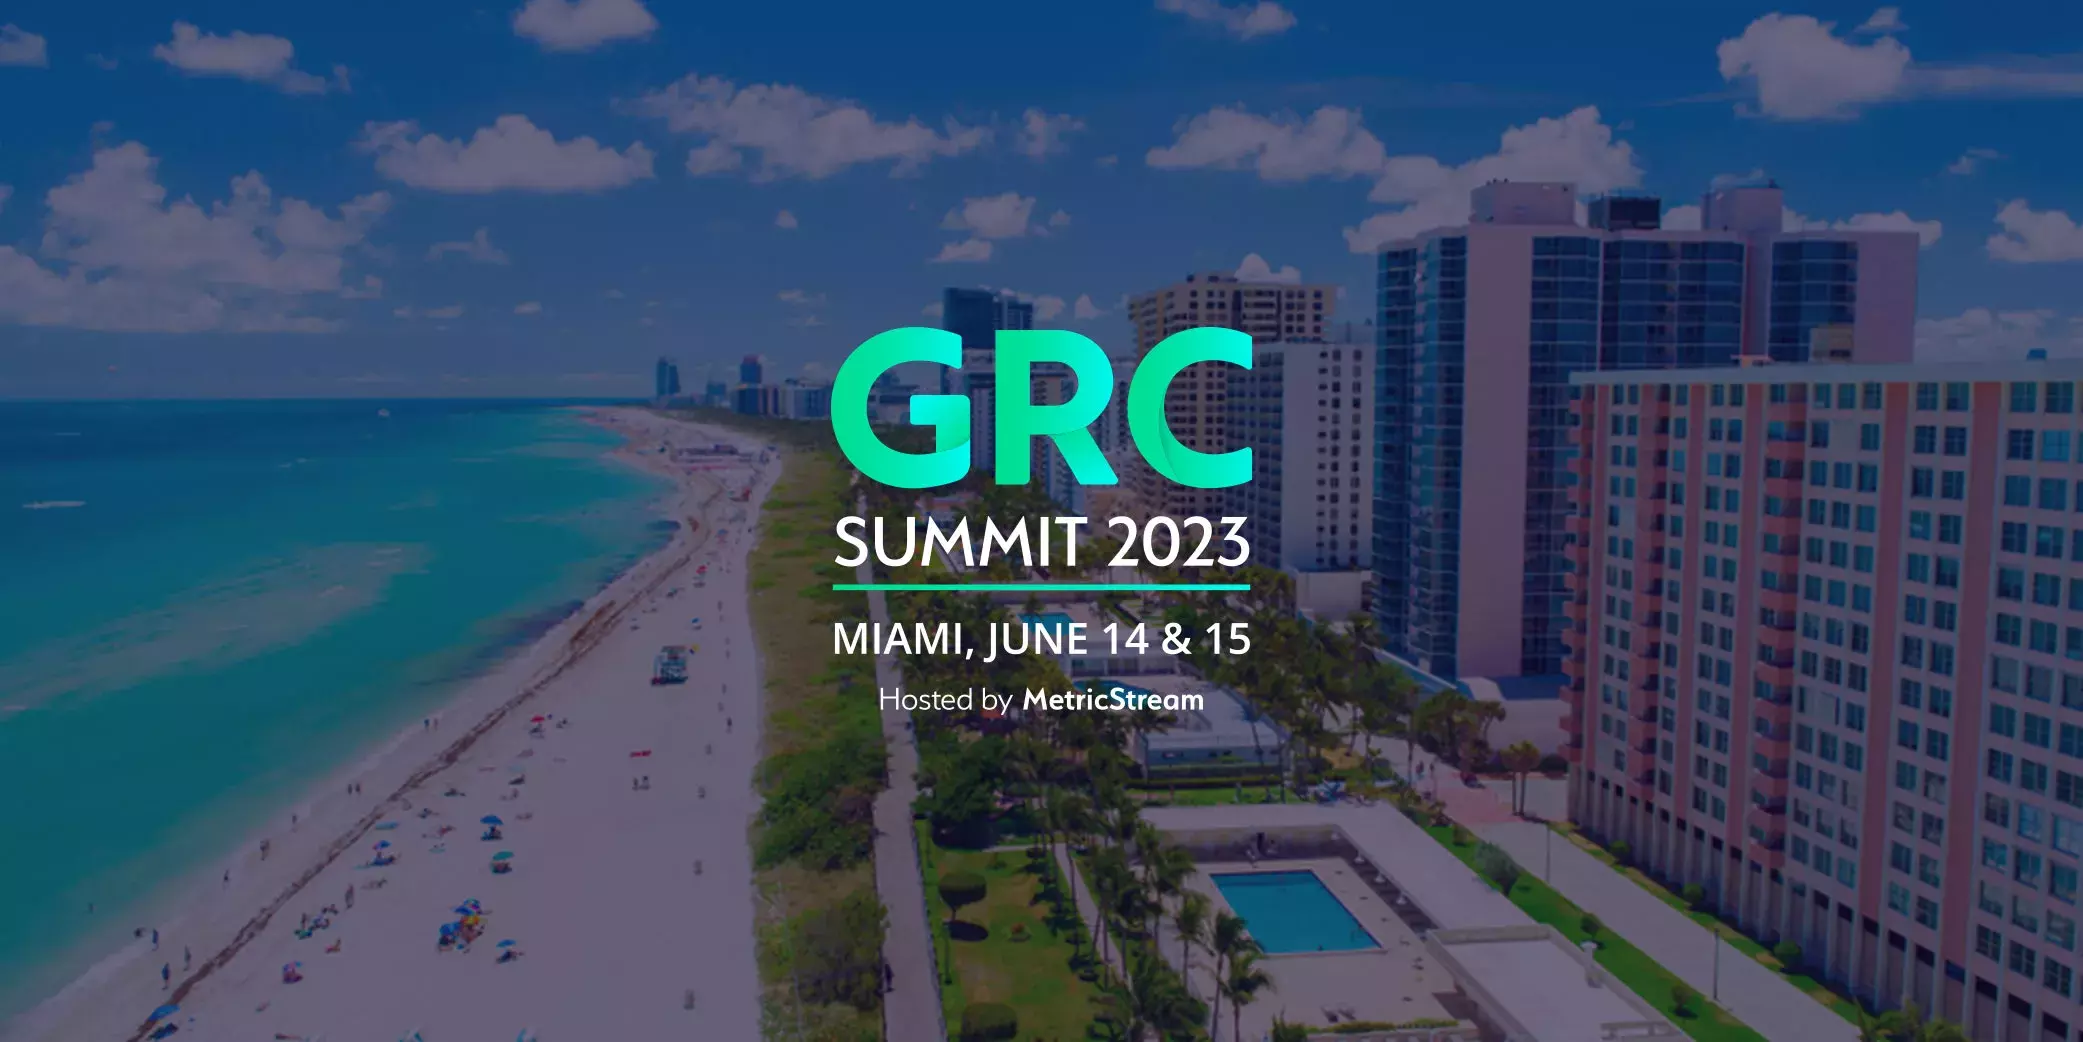 GRC Summit 2023, Miami: Meet the Speakers-Part 2